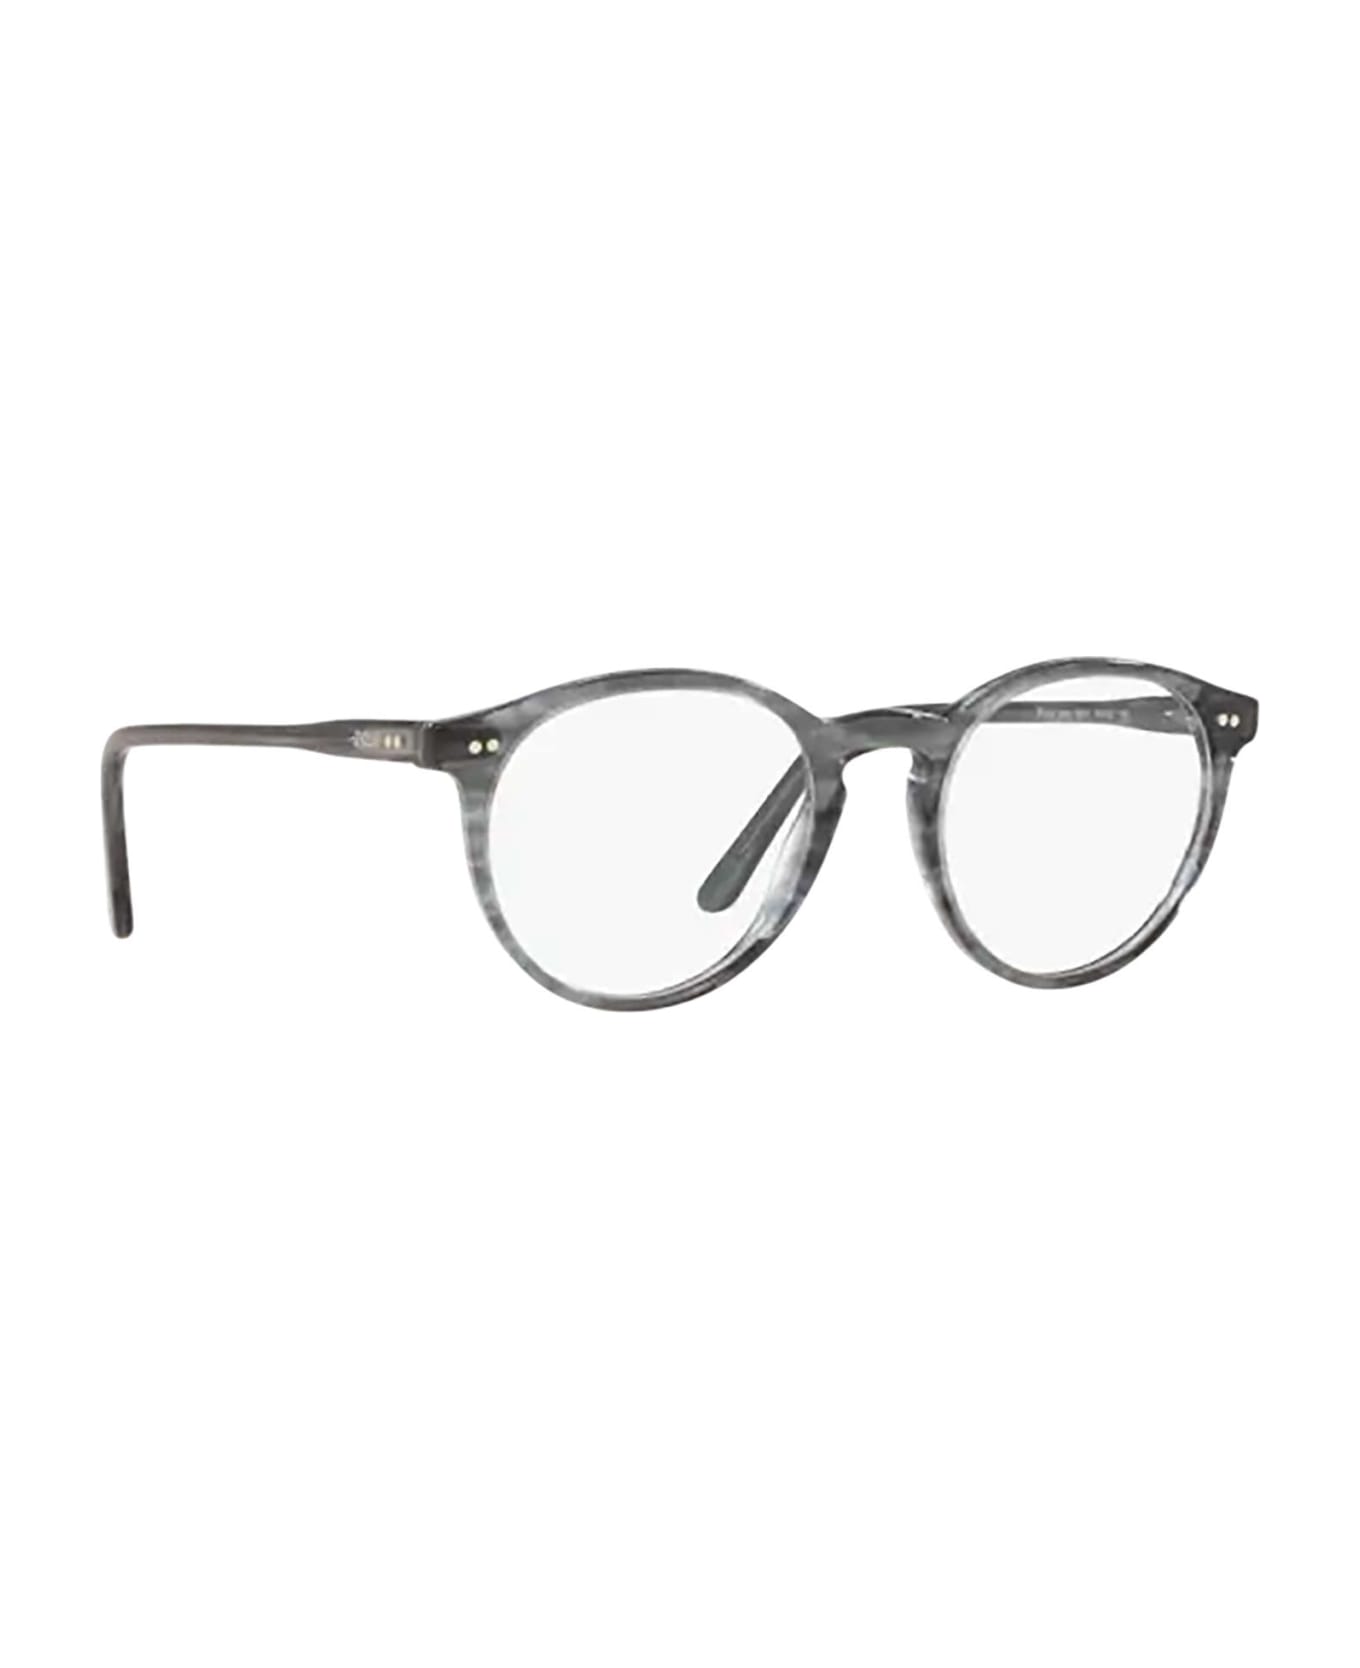 Polo Ralph Lauren Ph2083 Shiny Striped Grey Glasses - SHINY STRIPED GREY